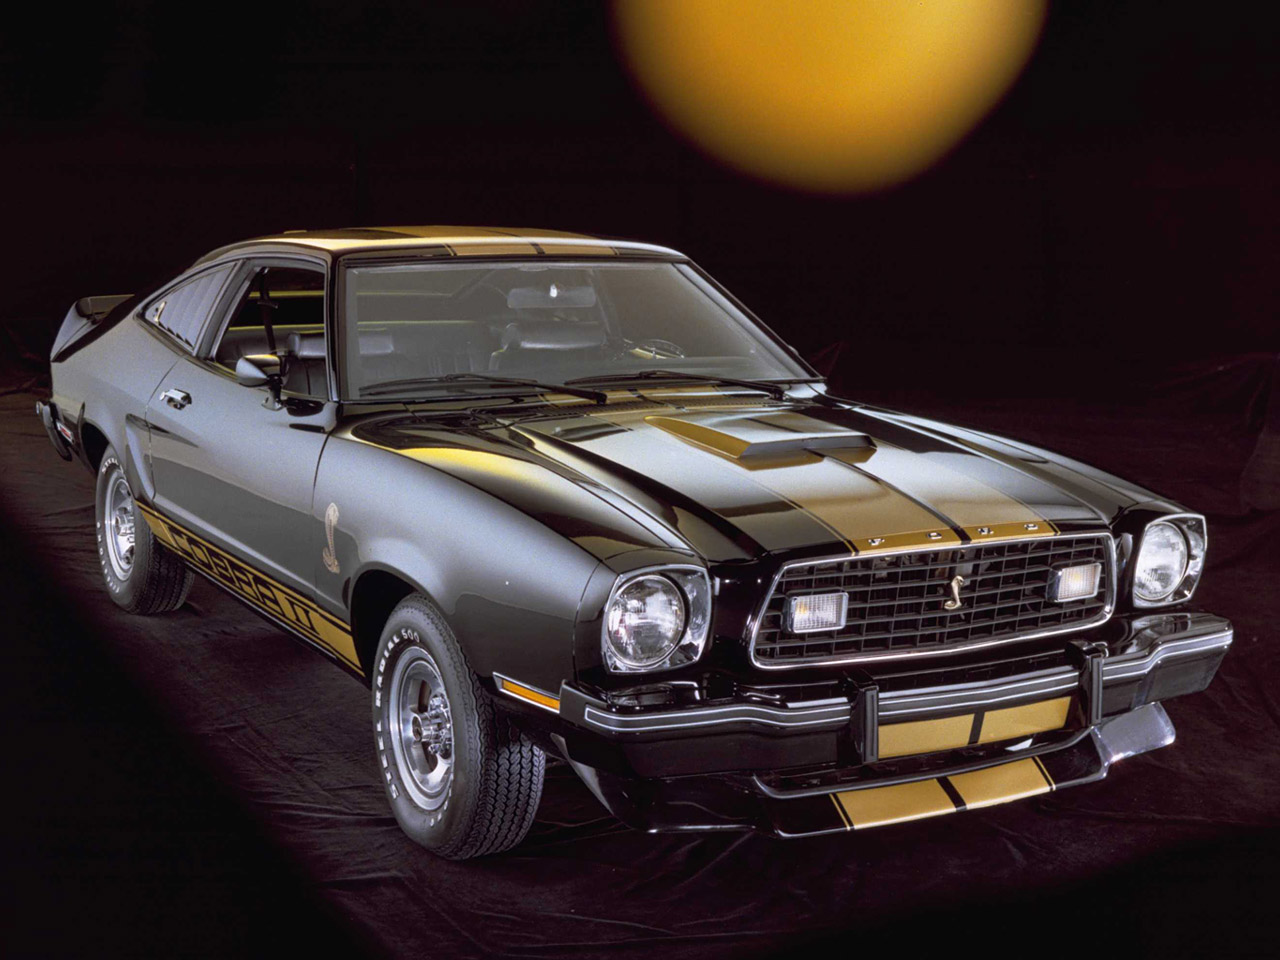 Ford Mustang History: 1976 | Shnack.com